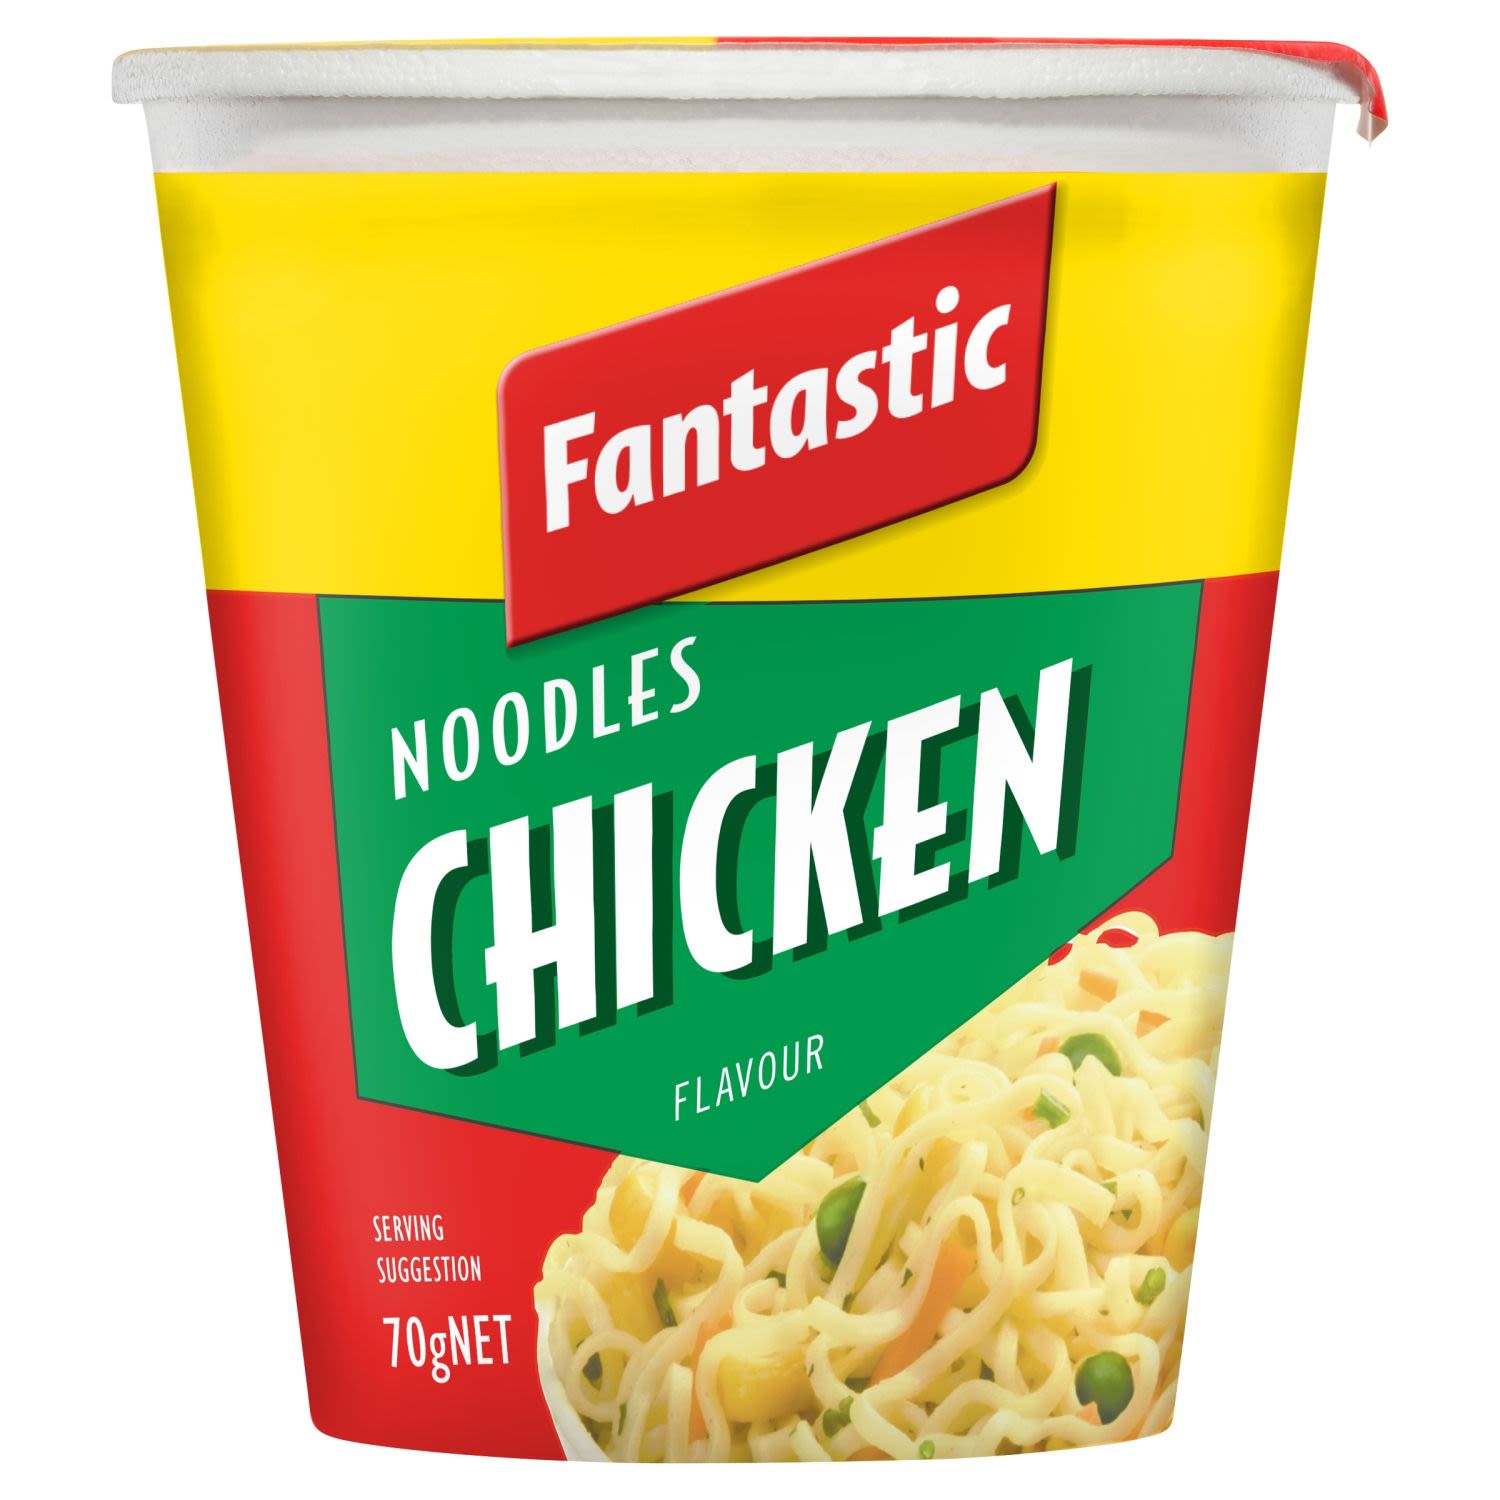 Fantastic Chicken Noodle Cup, 70 Gram